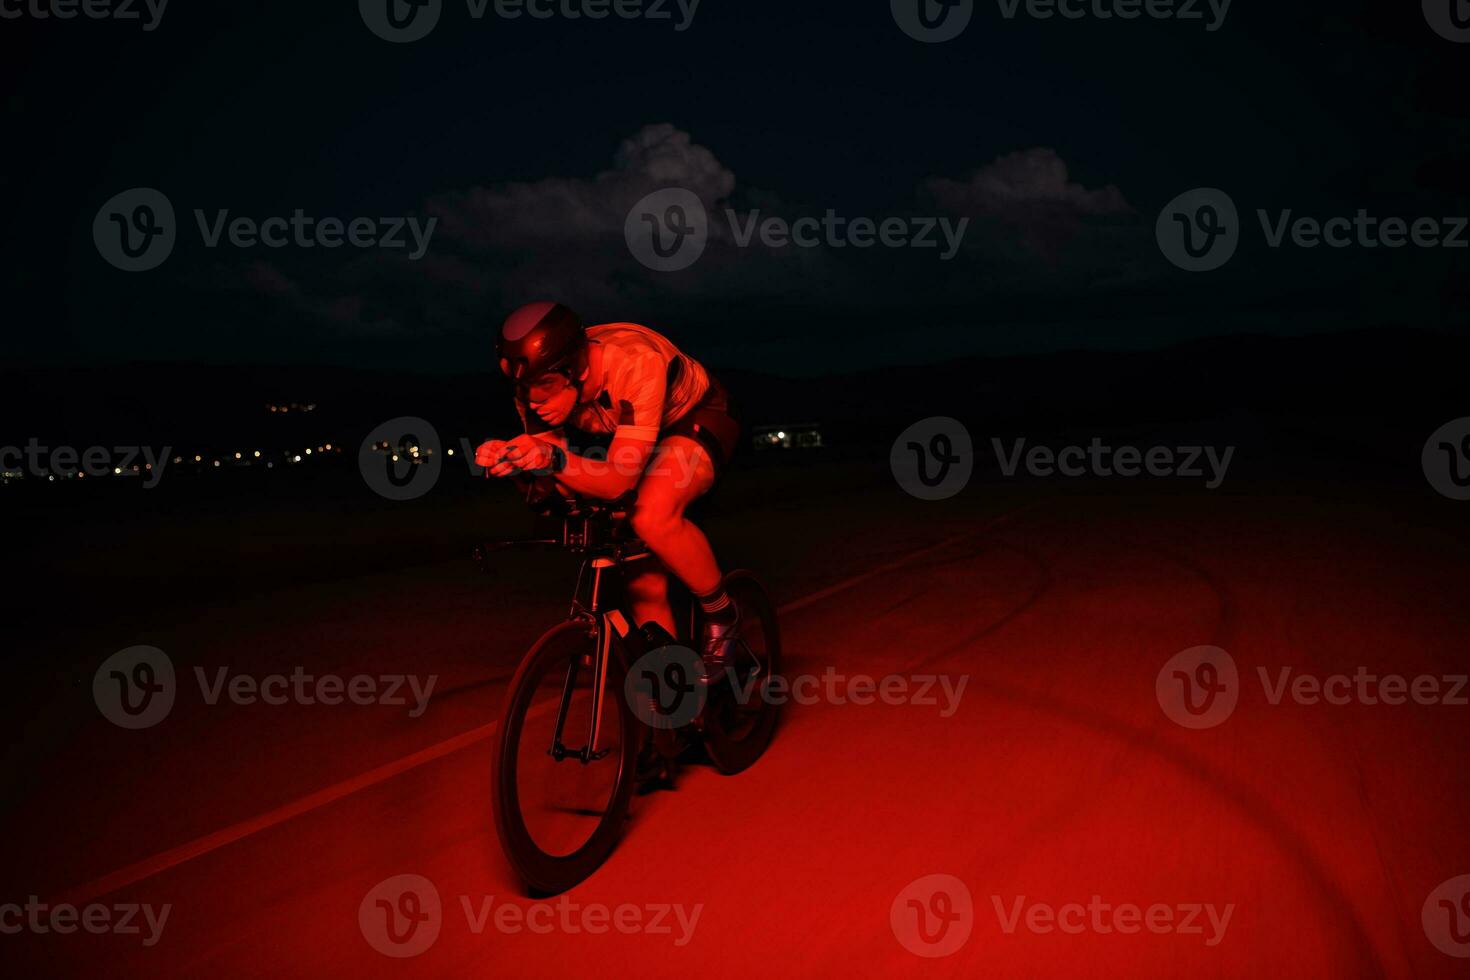 triathlon athlete riding bike fast at night photo